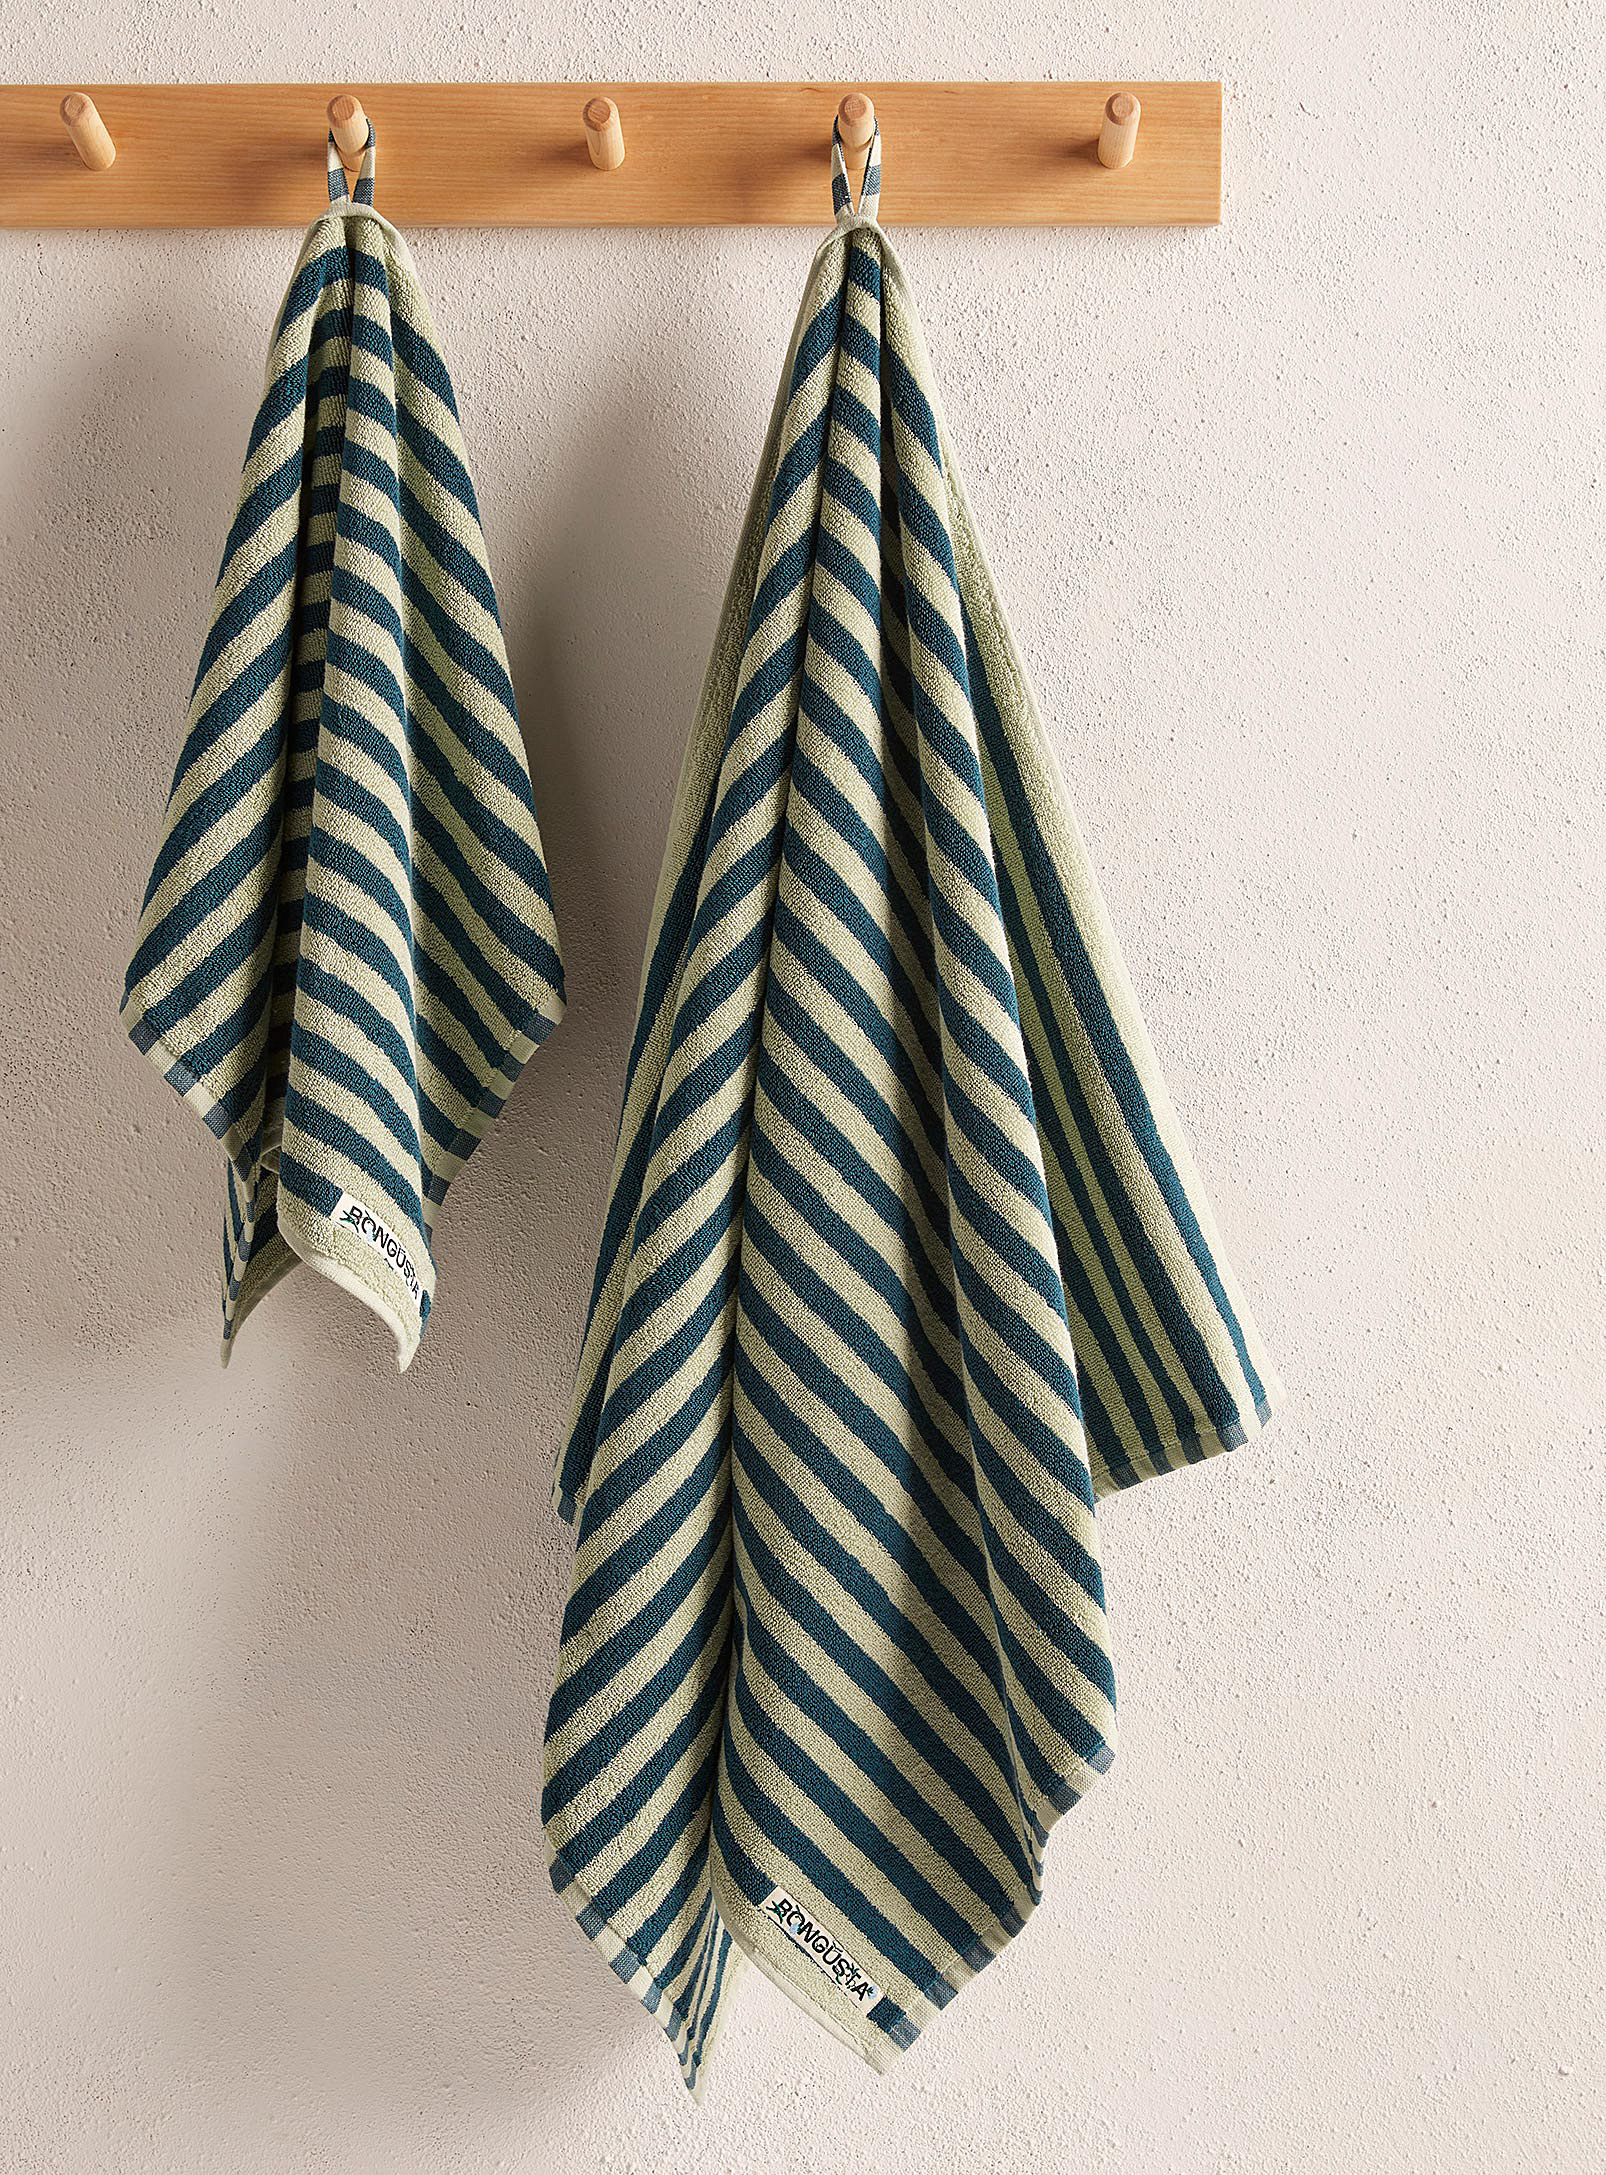 Bongusta Naram Striped Towels In Patterned Green